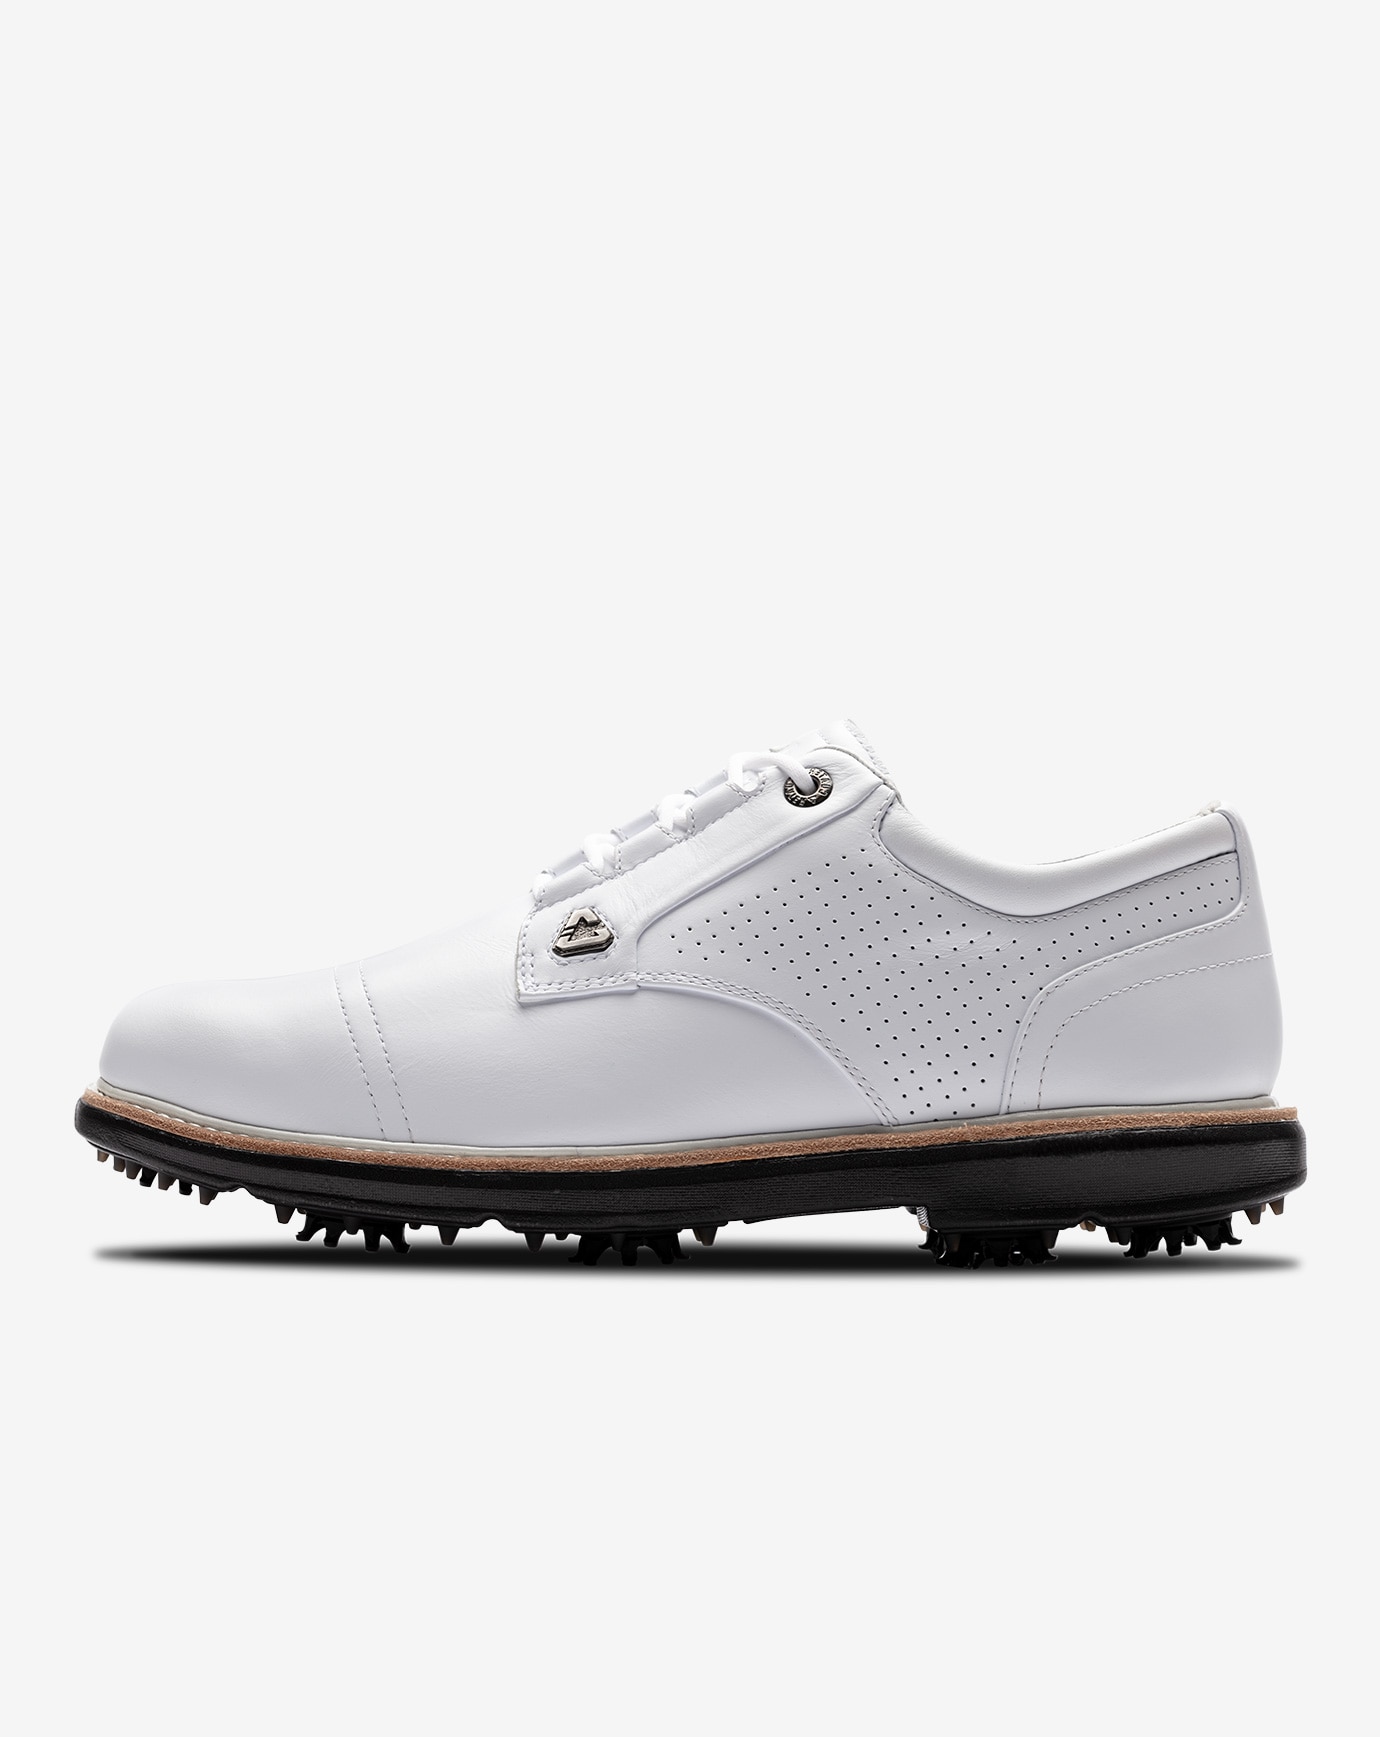 travis mathew golf shoes